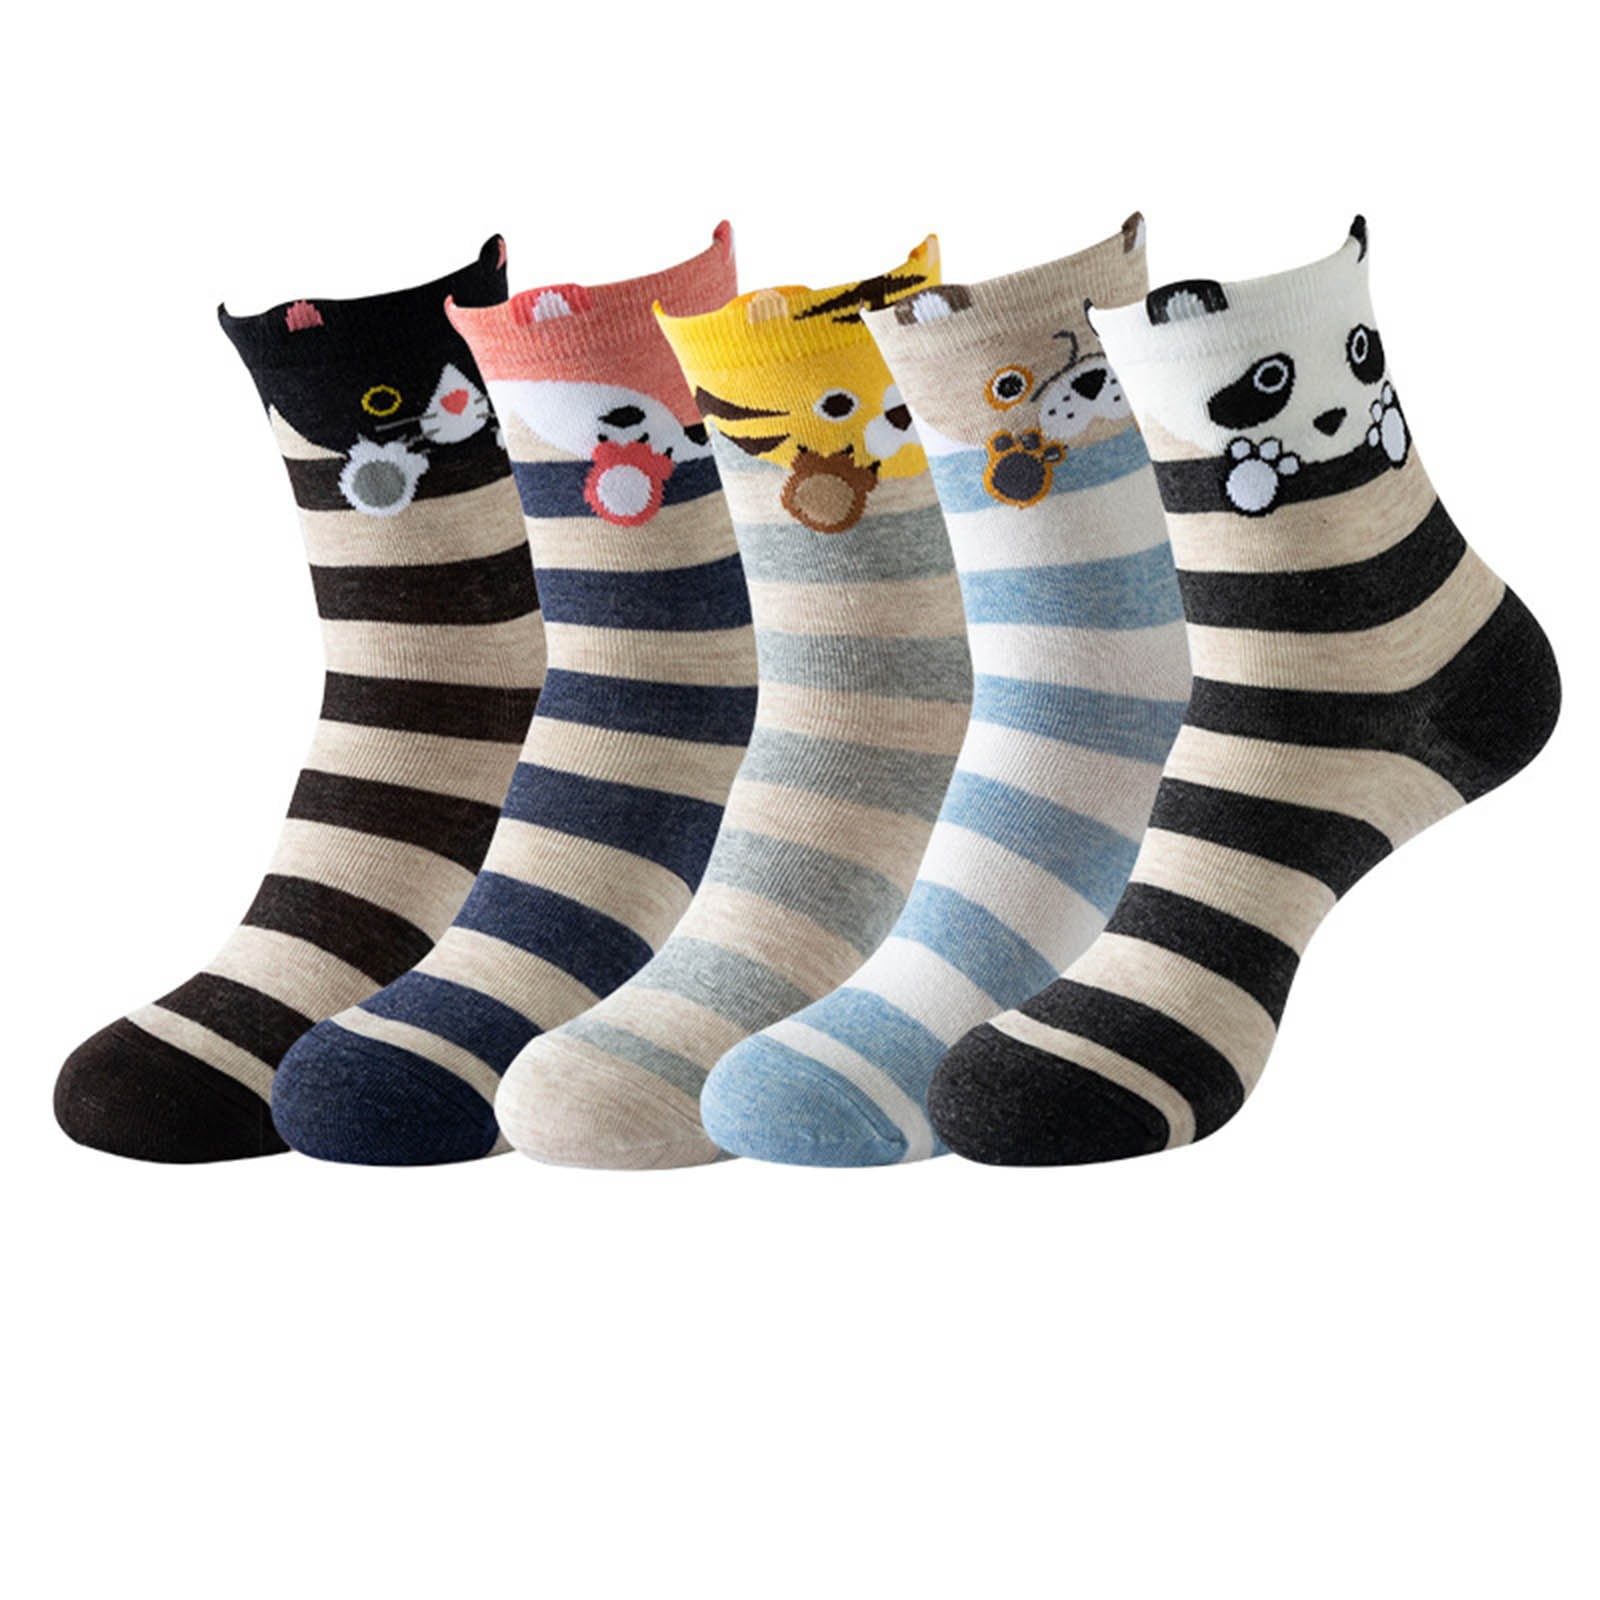 〖Yilirongyumm〗 Socks Womens Animal Themed Socks Five Pairs Set Cute ...